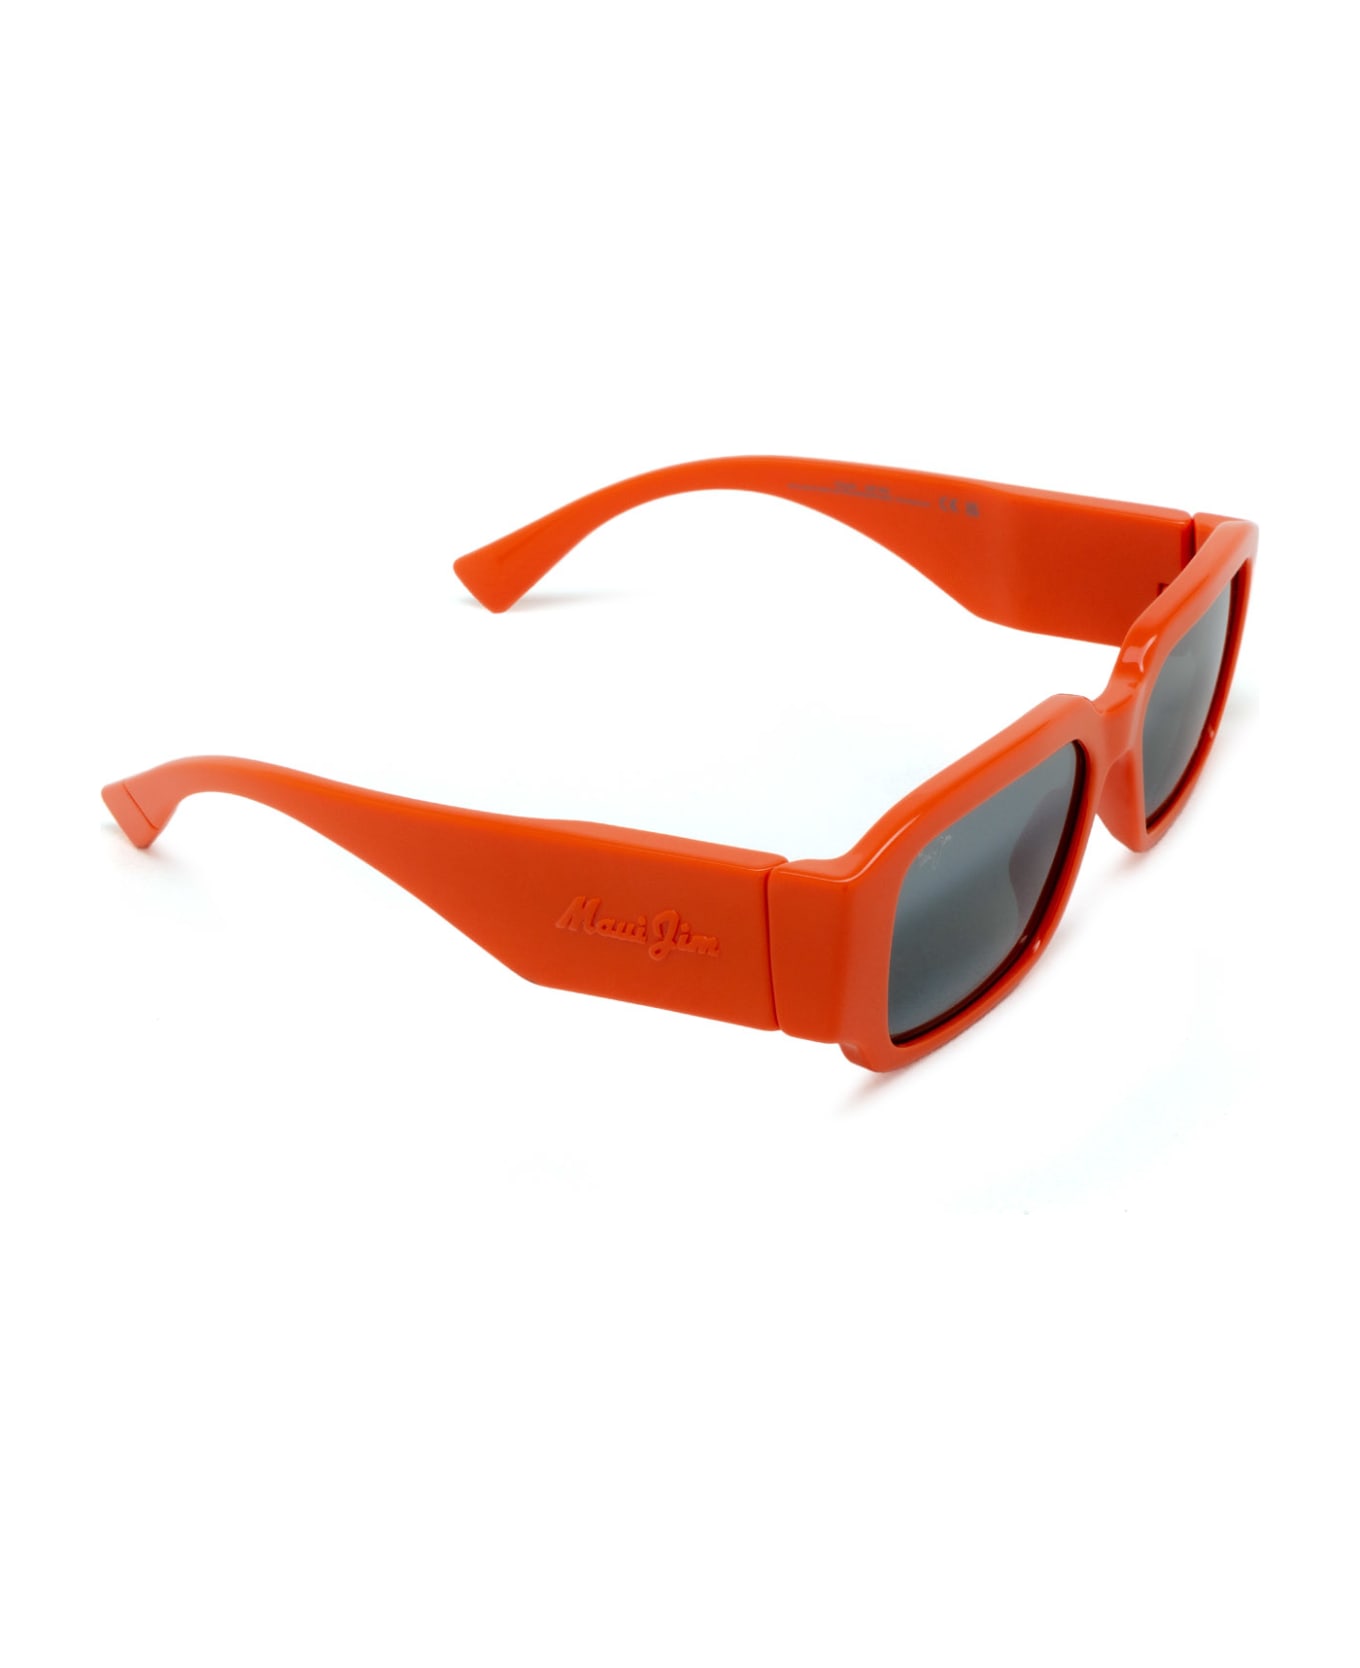 Maui Jim Mj639 Shiny Orange Sunglasses - Shiny Orange